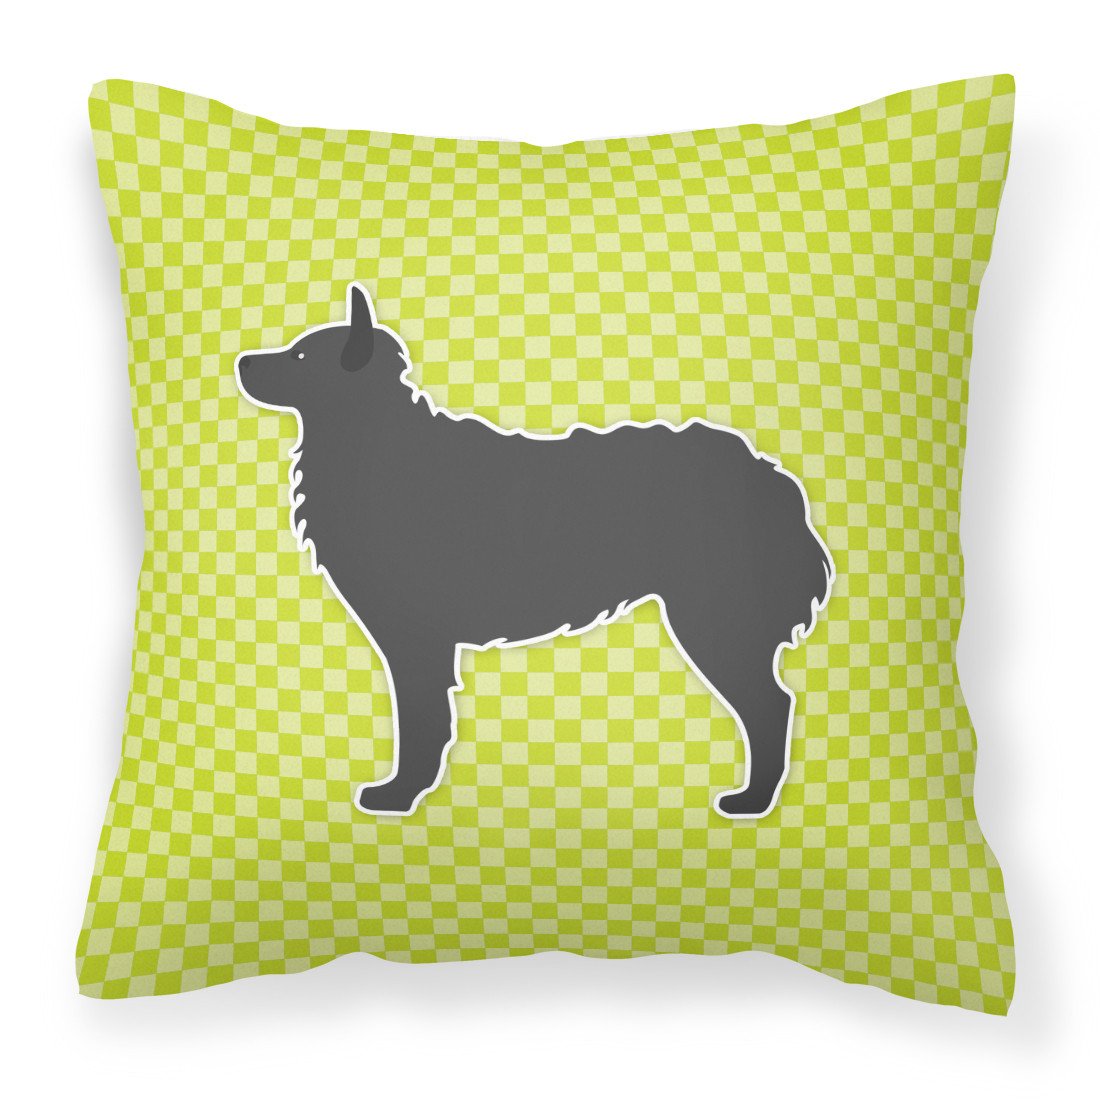 Croatian Sheepdog Checkerboard Green Fabric Decorative Pillow BB3821PW1818 by Caroline's Treasures